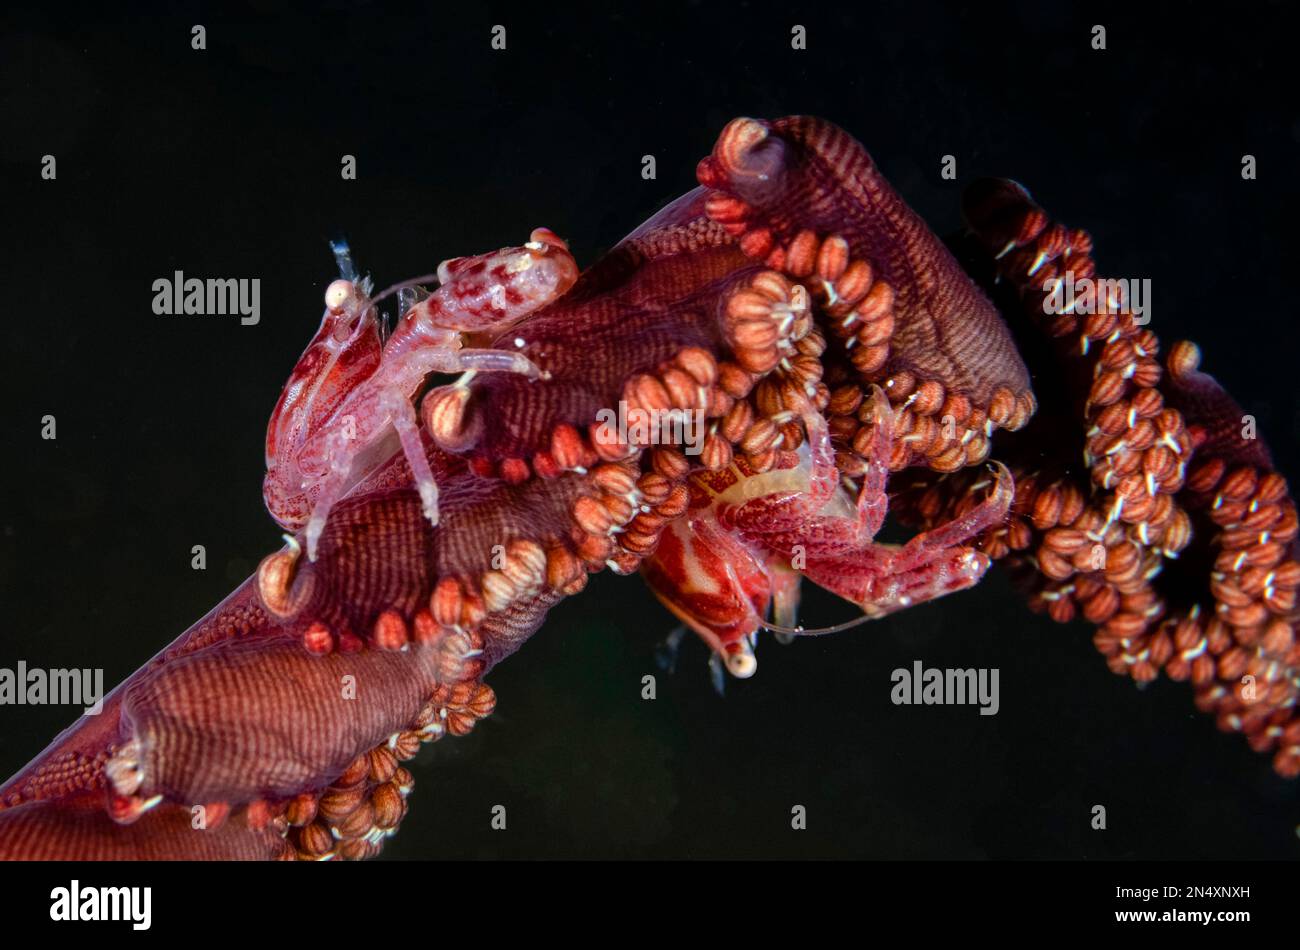 Porcelain Crab, Lissoporcellana sp, pair on sea pen, Sampiri 3 dive site, Bangka Island, north Sulawesi, Indonesia, Pacific Ocean Stock Photo